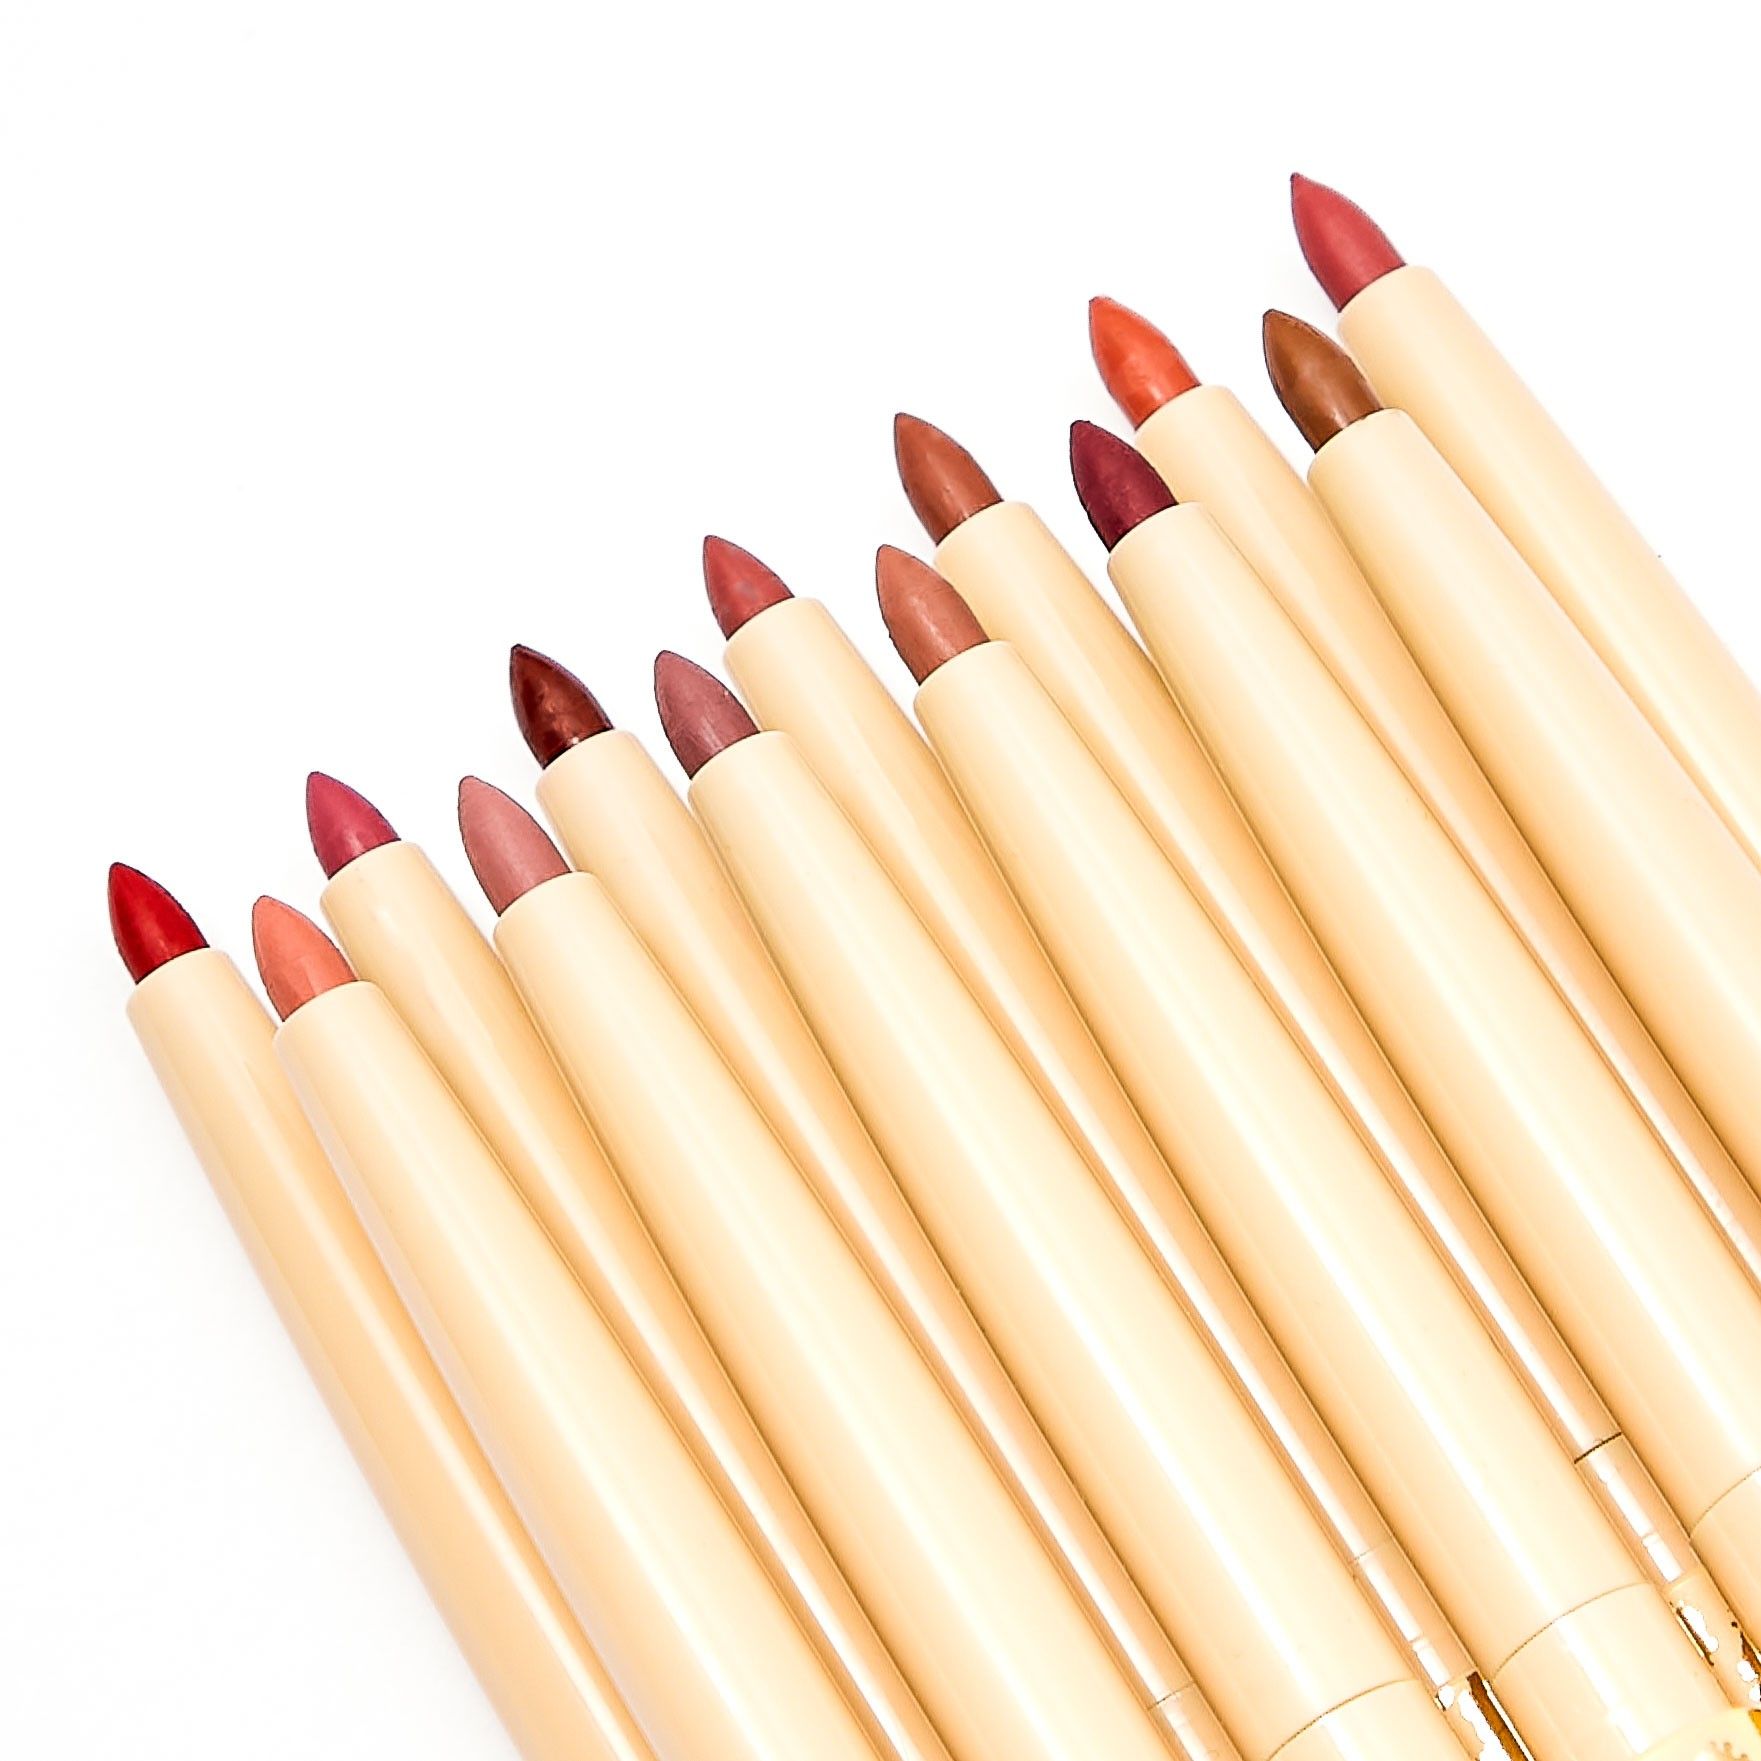 Crayon à Lèvres - New Neutral Lip Liner 